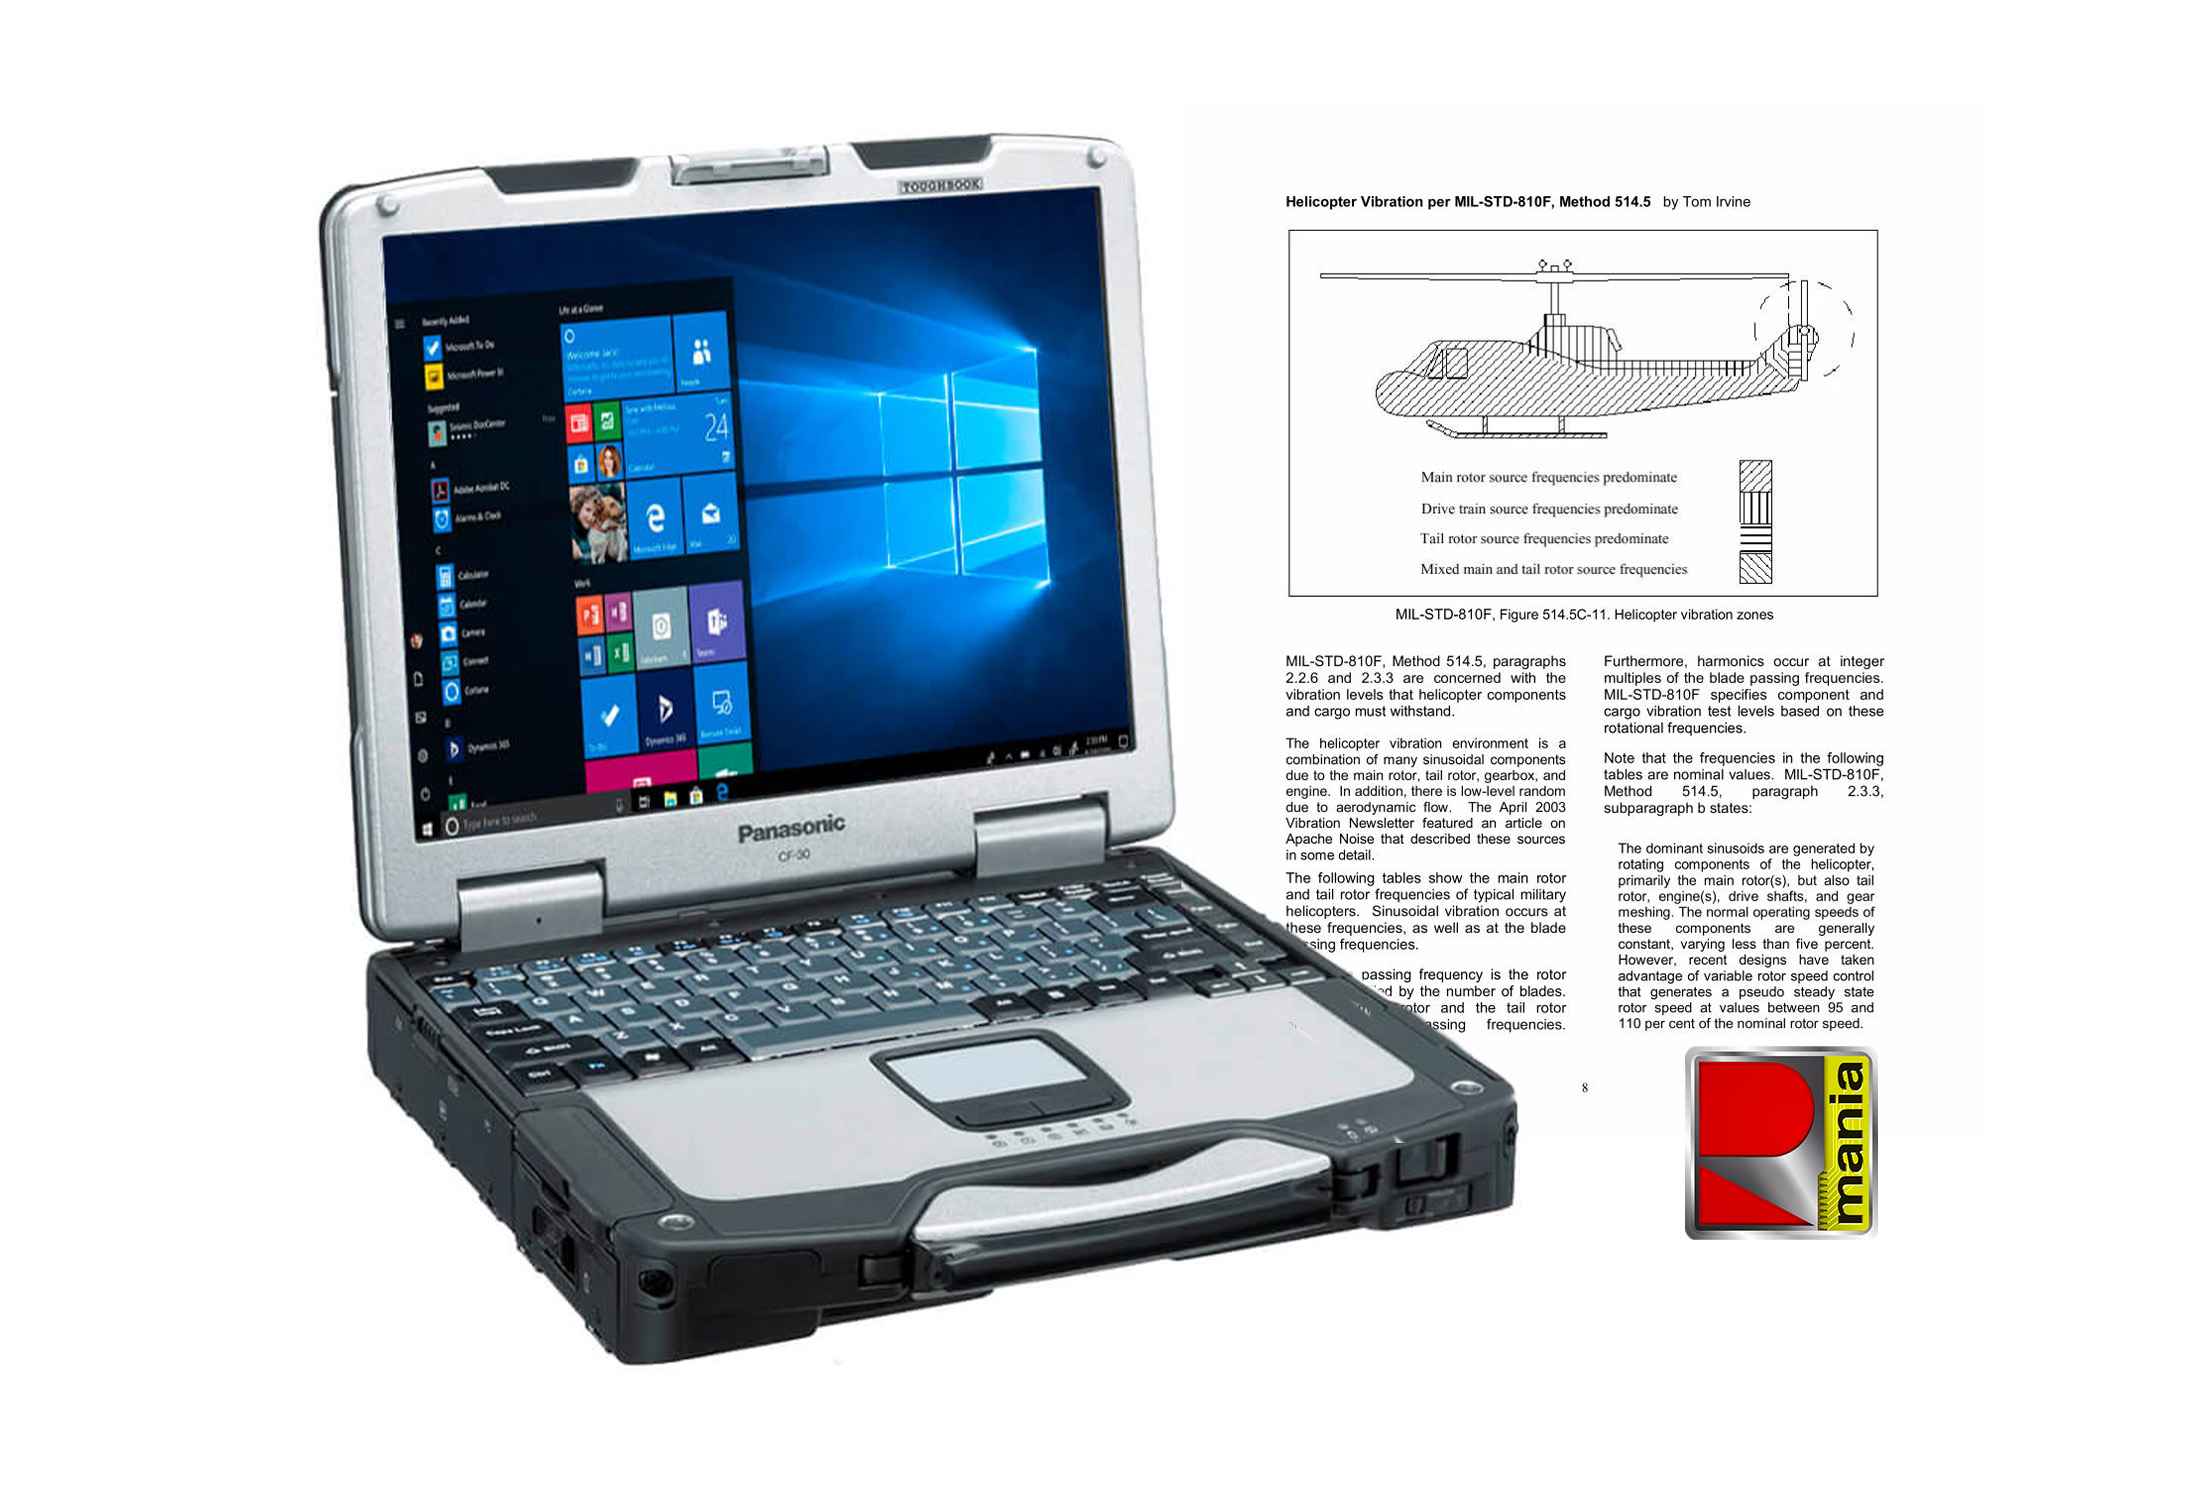 Panasonic Toughbook CF-30 Core 2 Duo L7500 3GB RAM A Status-44CDm.jpeg